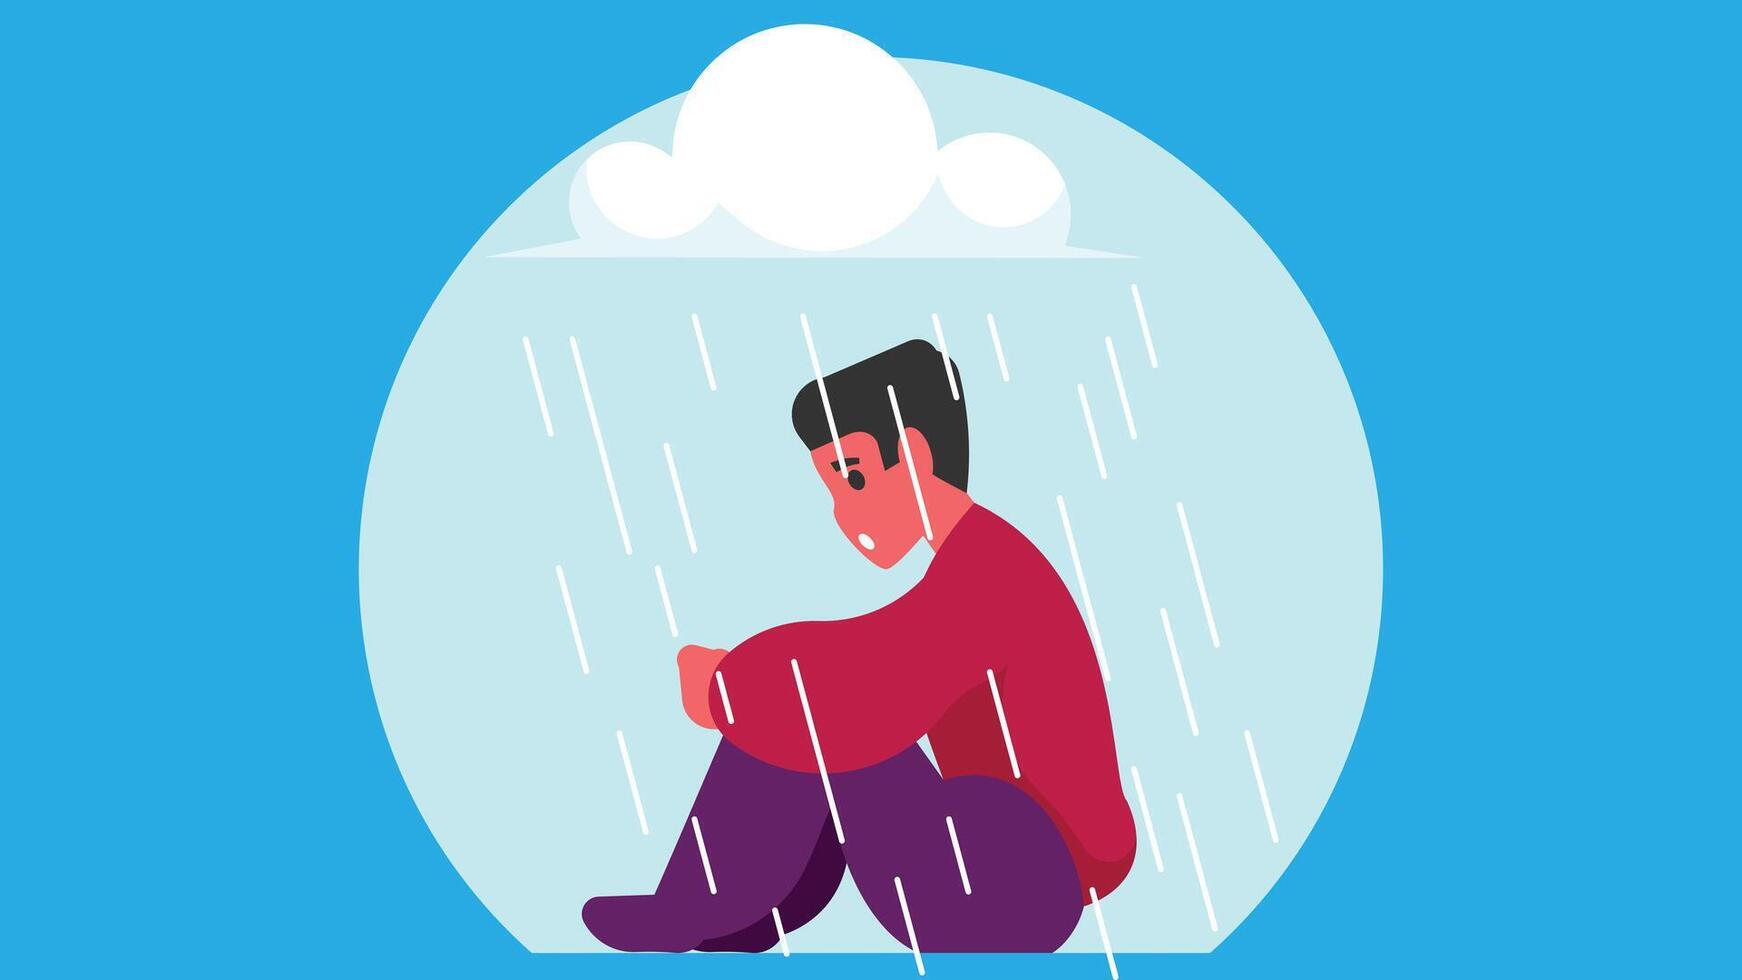 depressed man under the rain isolated vector illustration